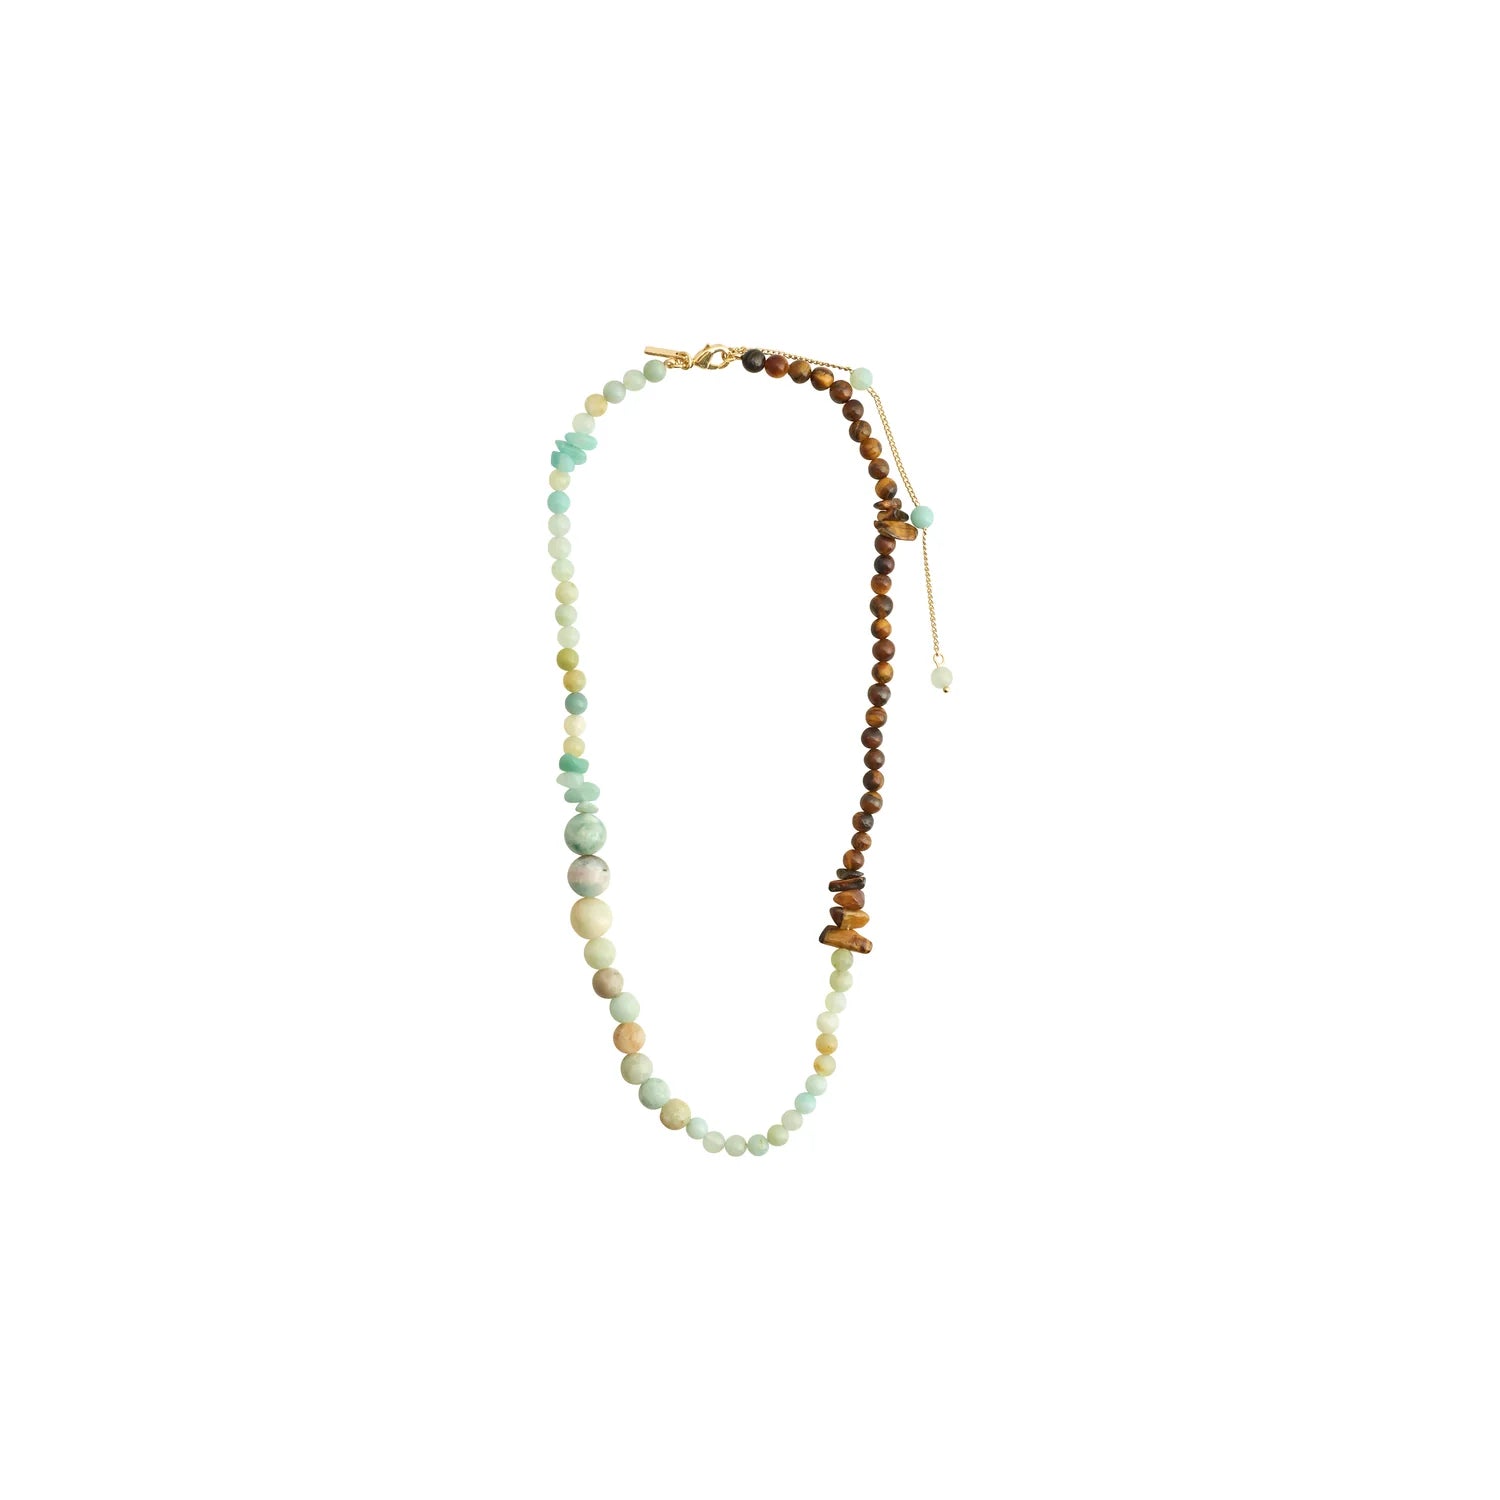 Soulmates Necklace - Tigers Eye/Amazonite - Confidence & Courage - Pilgrim Jewellery